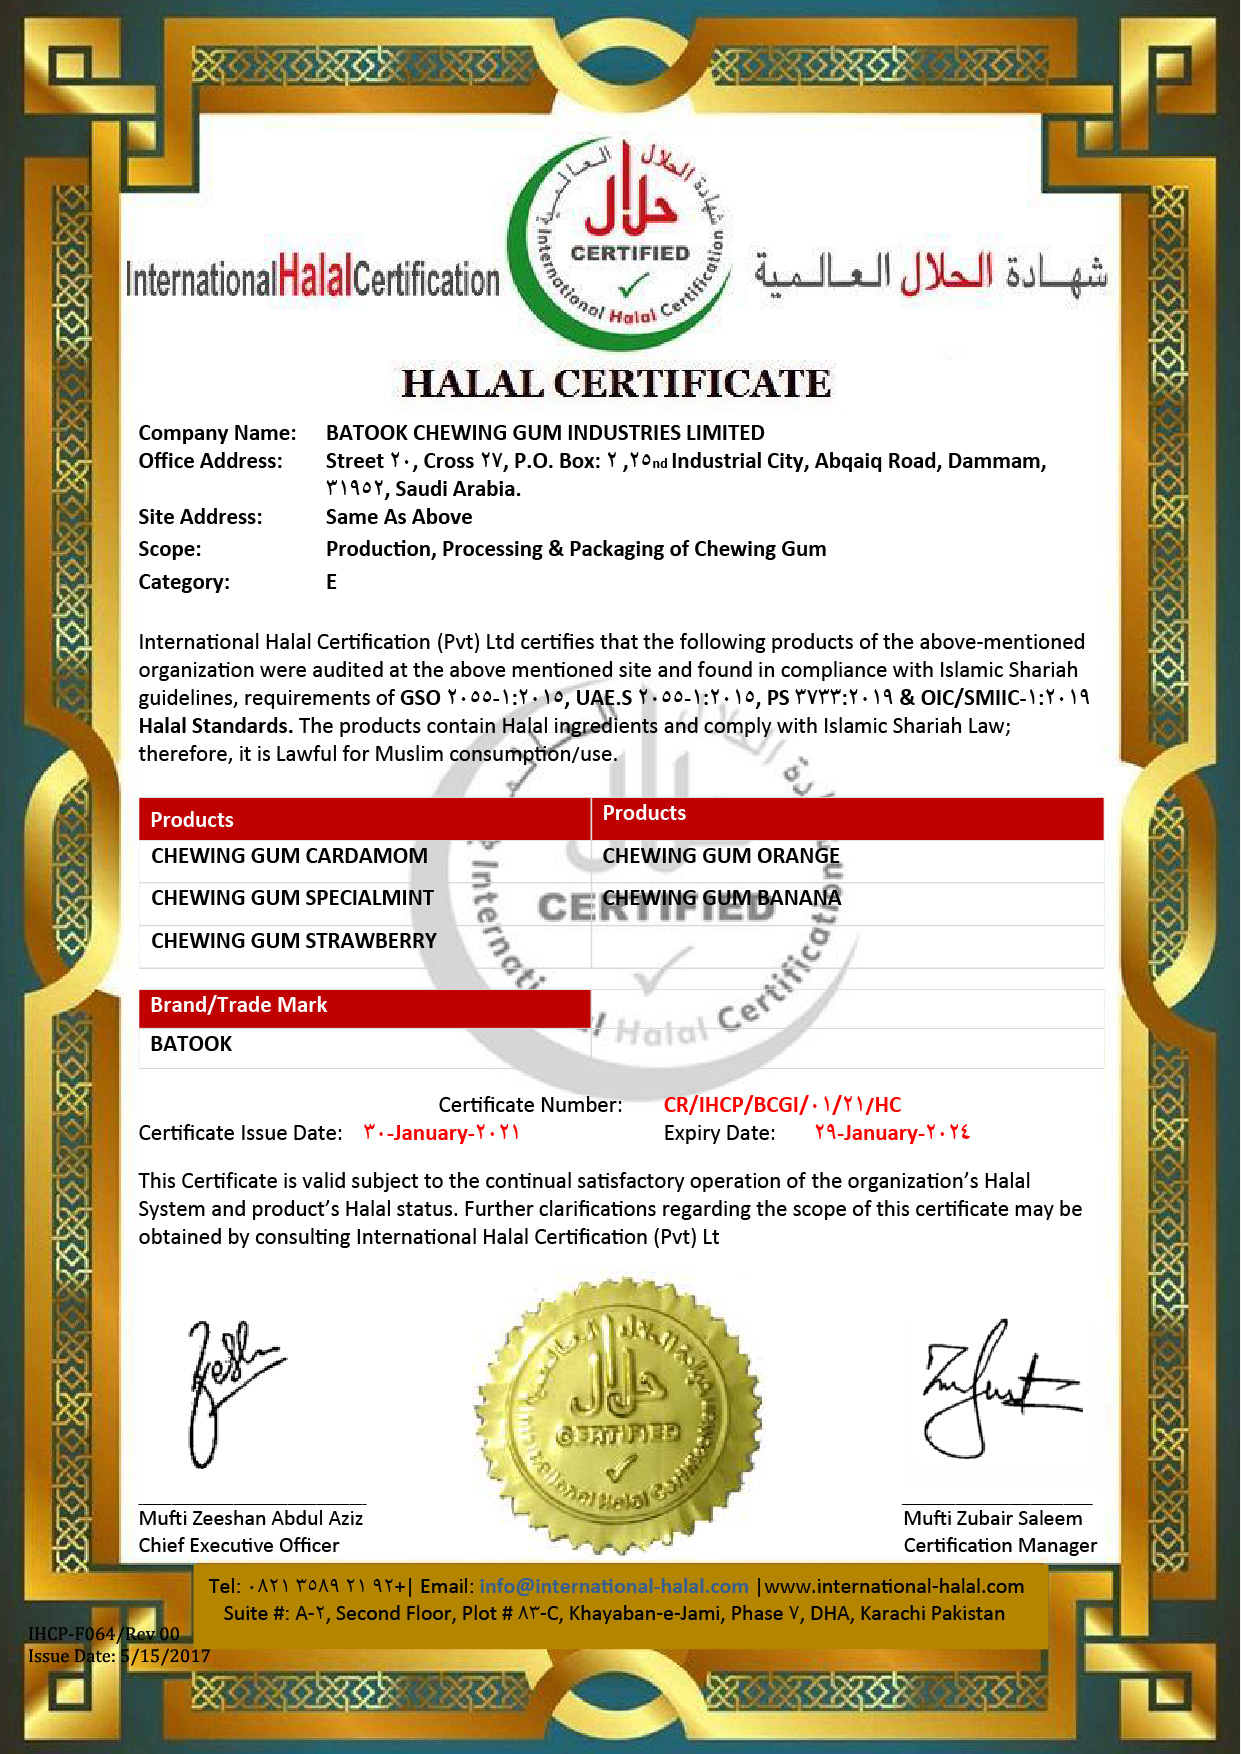 IHC Halal Certificate 2021